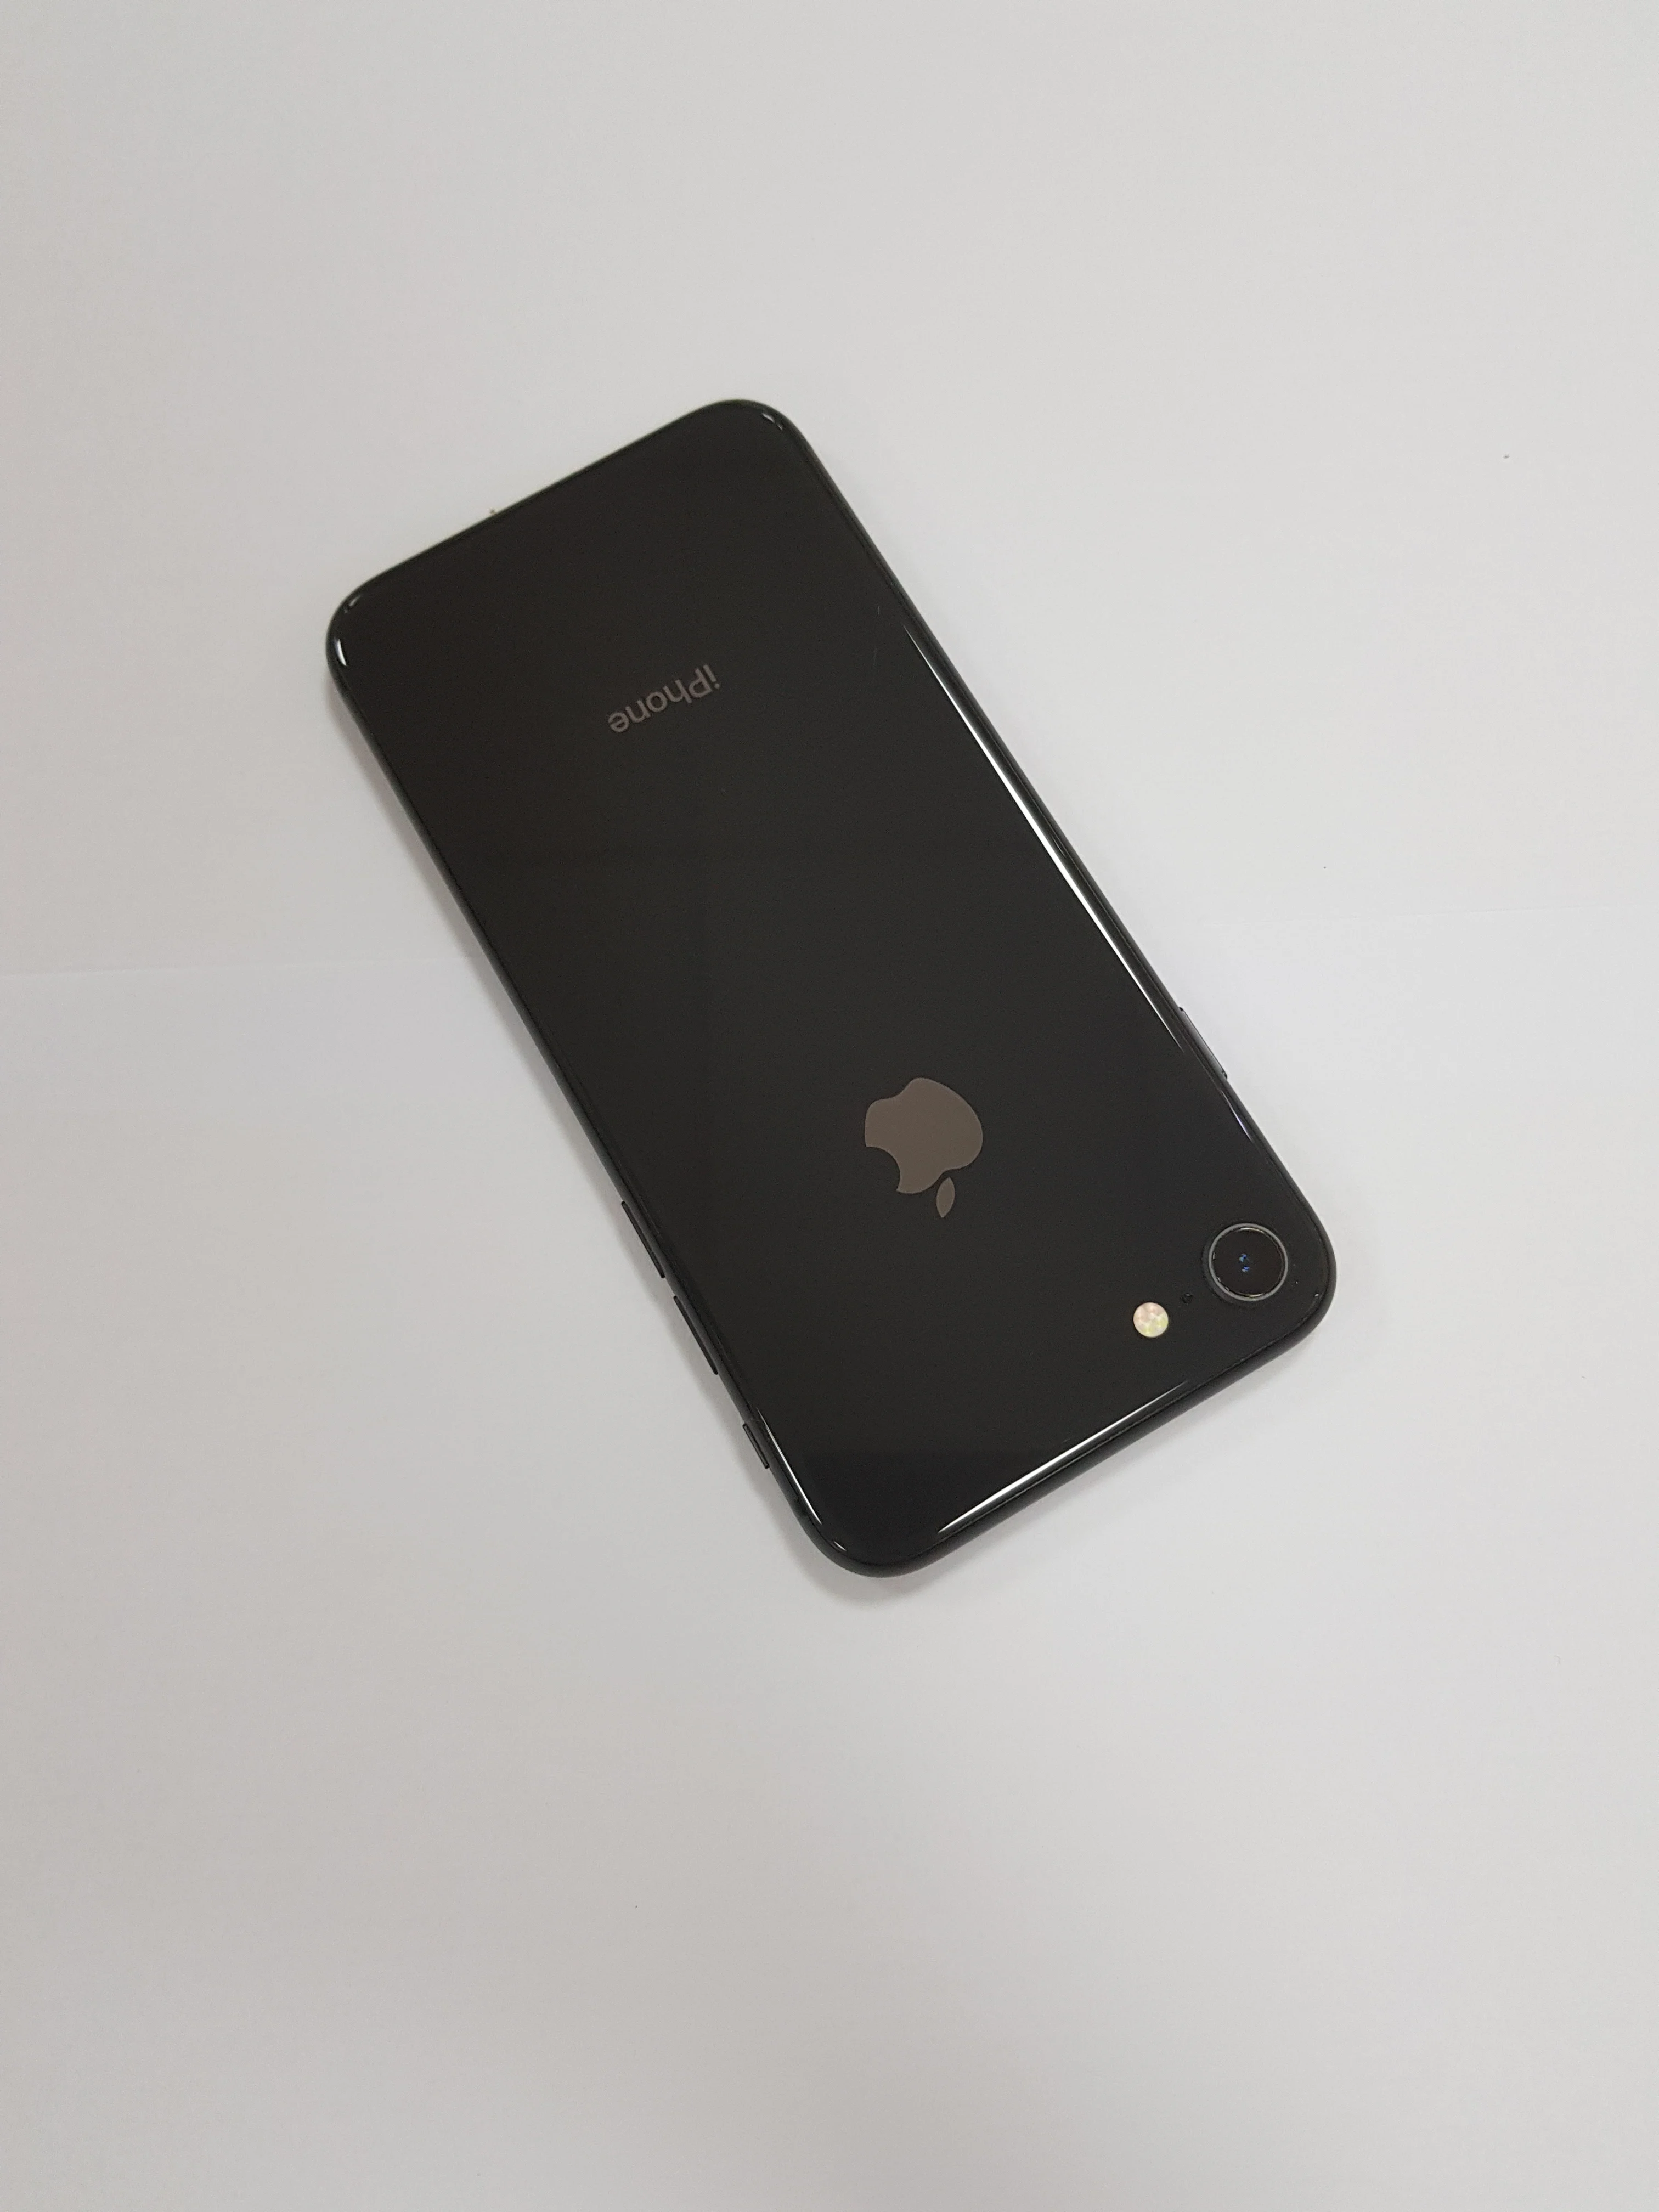 Apple iPhone 8 Used Original GSM Unlocked iOS A11 Bionic 2GB RAM 64G/256GB ROM 4.7